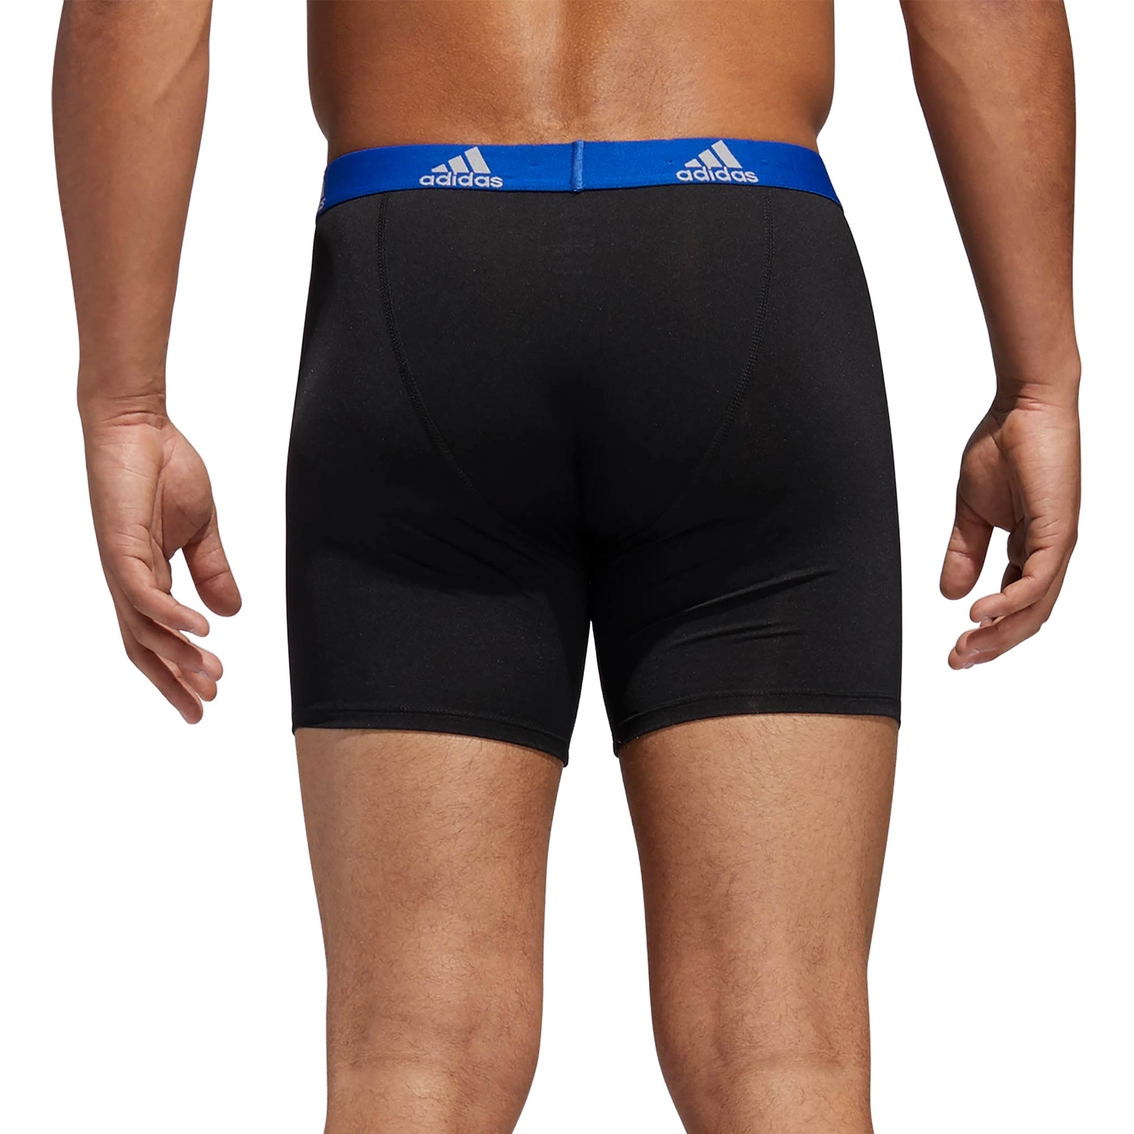 Adidas Climalite 3 Pk. Boxer Brief Underwear | Clothing & Accessories | Shop The Exchange